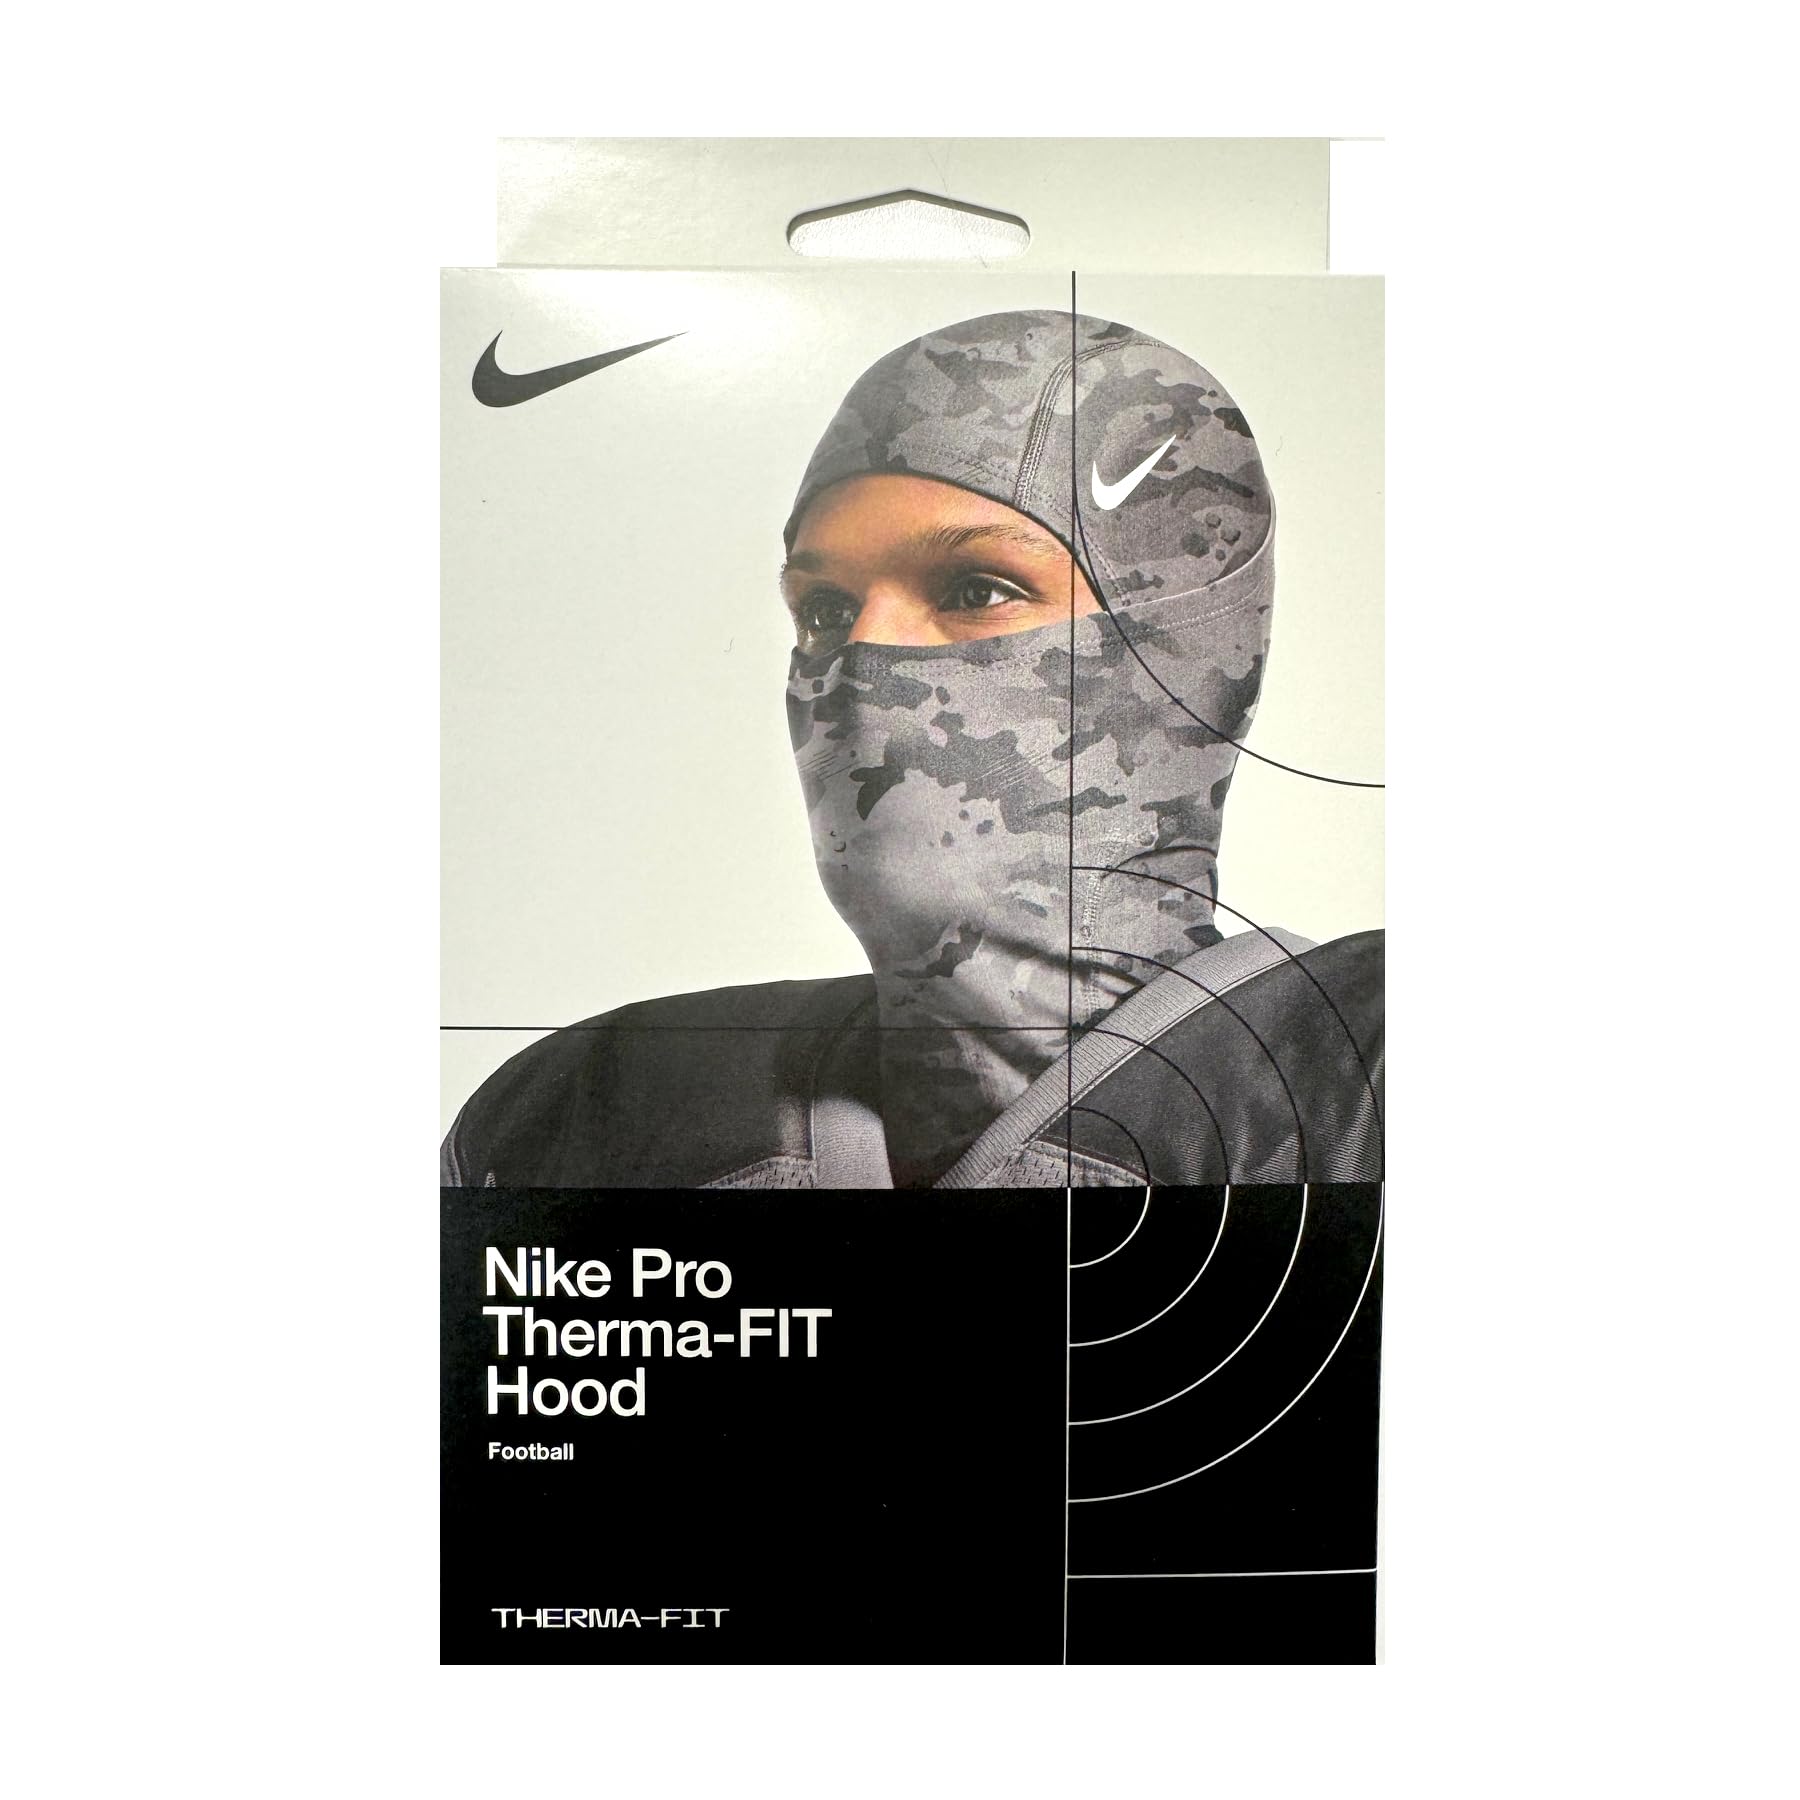 Nike Pro Therma-Fit Hyperwarm Hood, Balaclava (Grey Camo) - Unisex